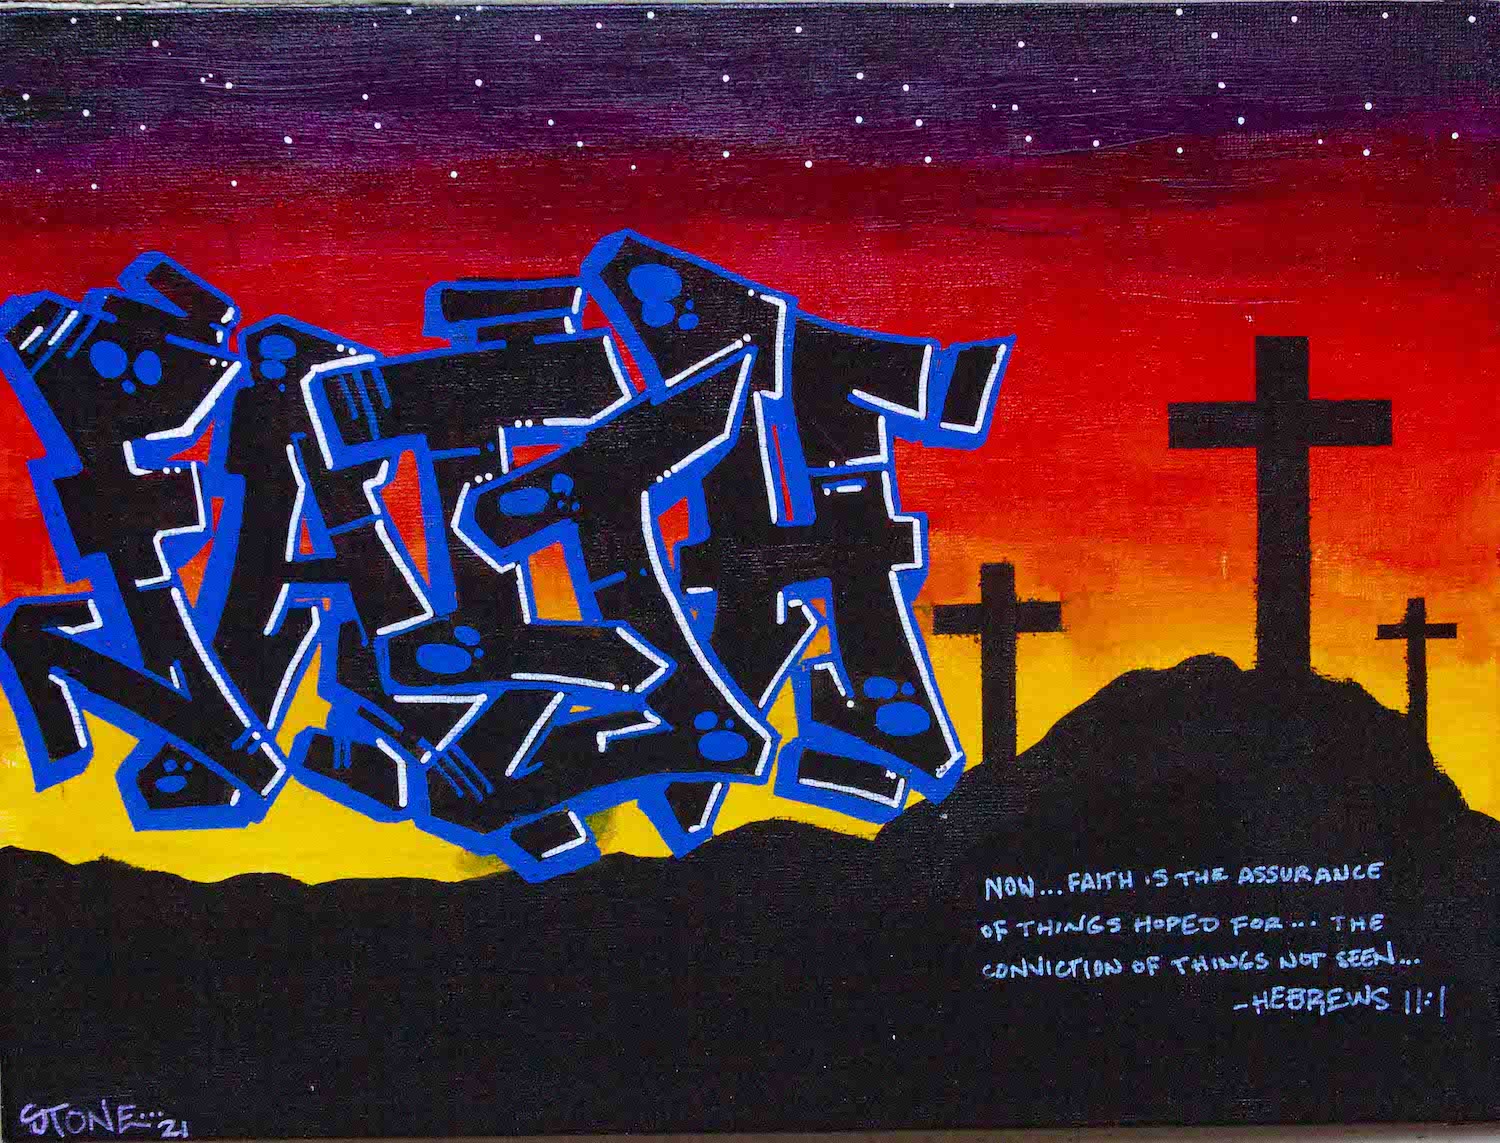 "Faith" prison art original art Gregory Stone 